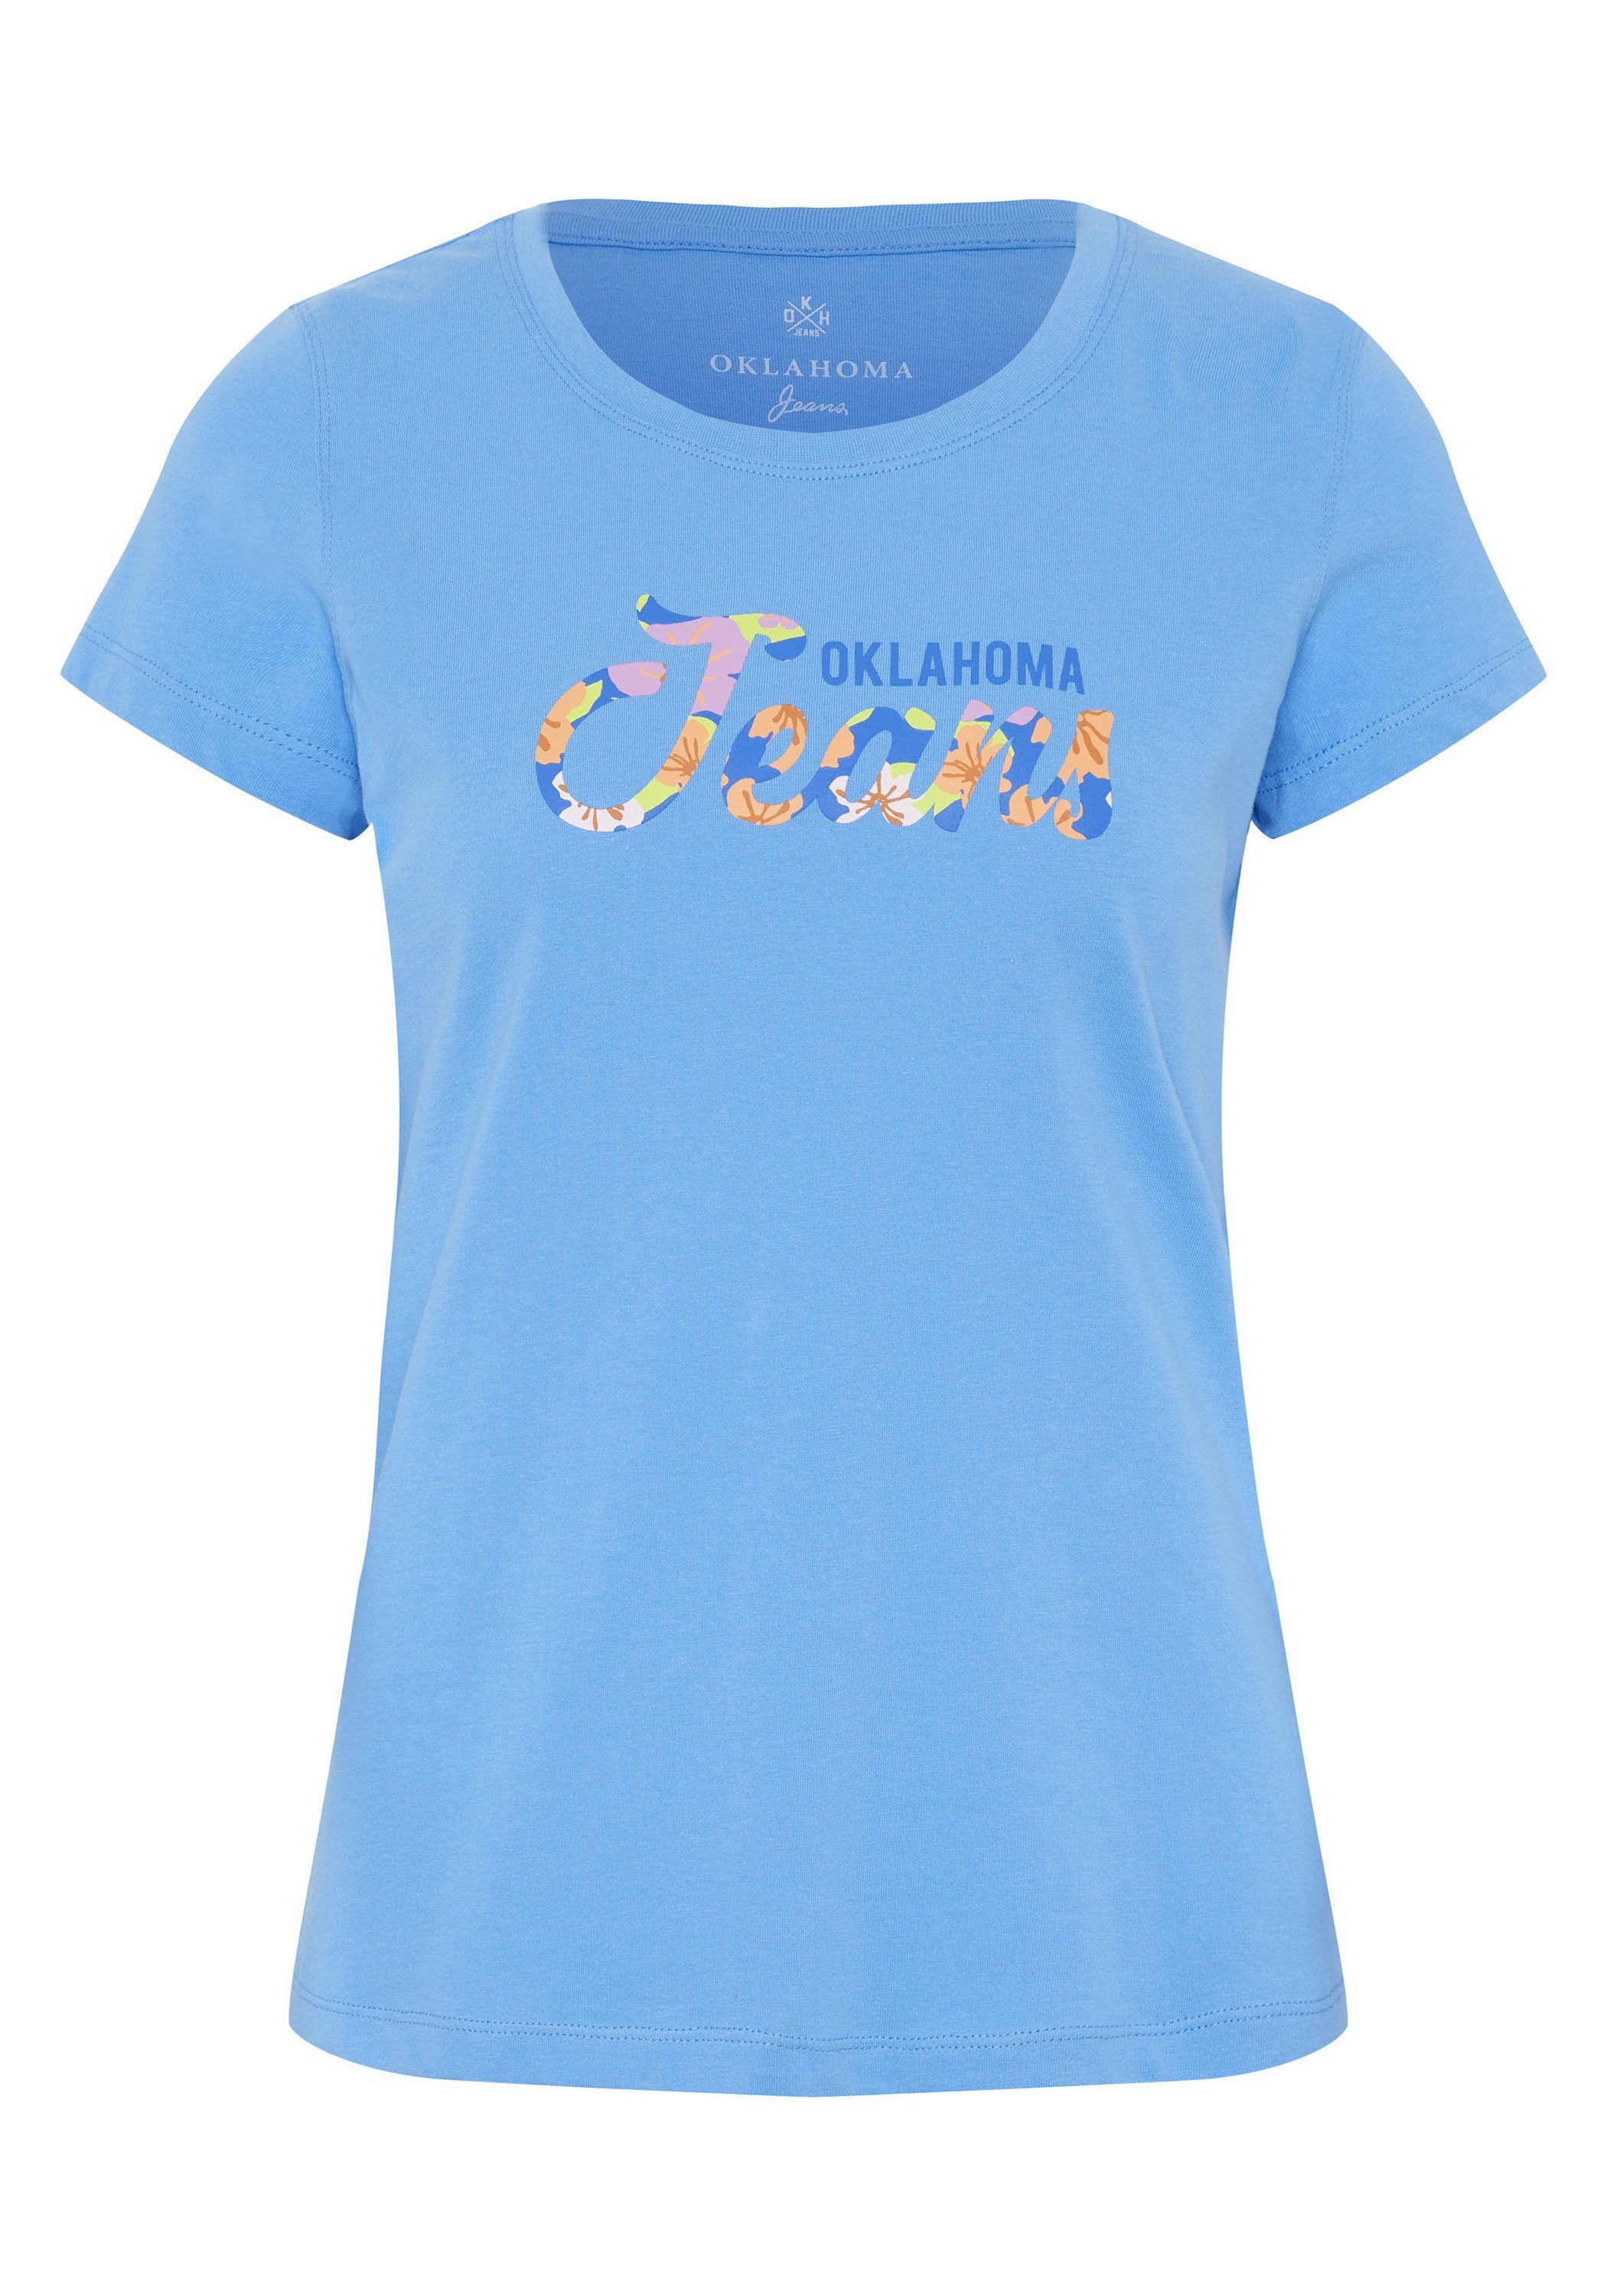 Jeans 17-4139 Oklahoma Azure Print-Shirt Blue Label-Akzent floralem mit